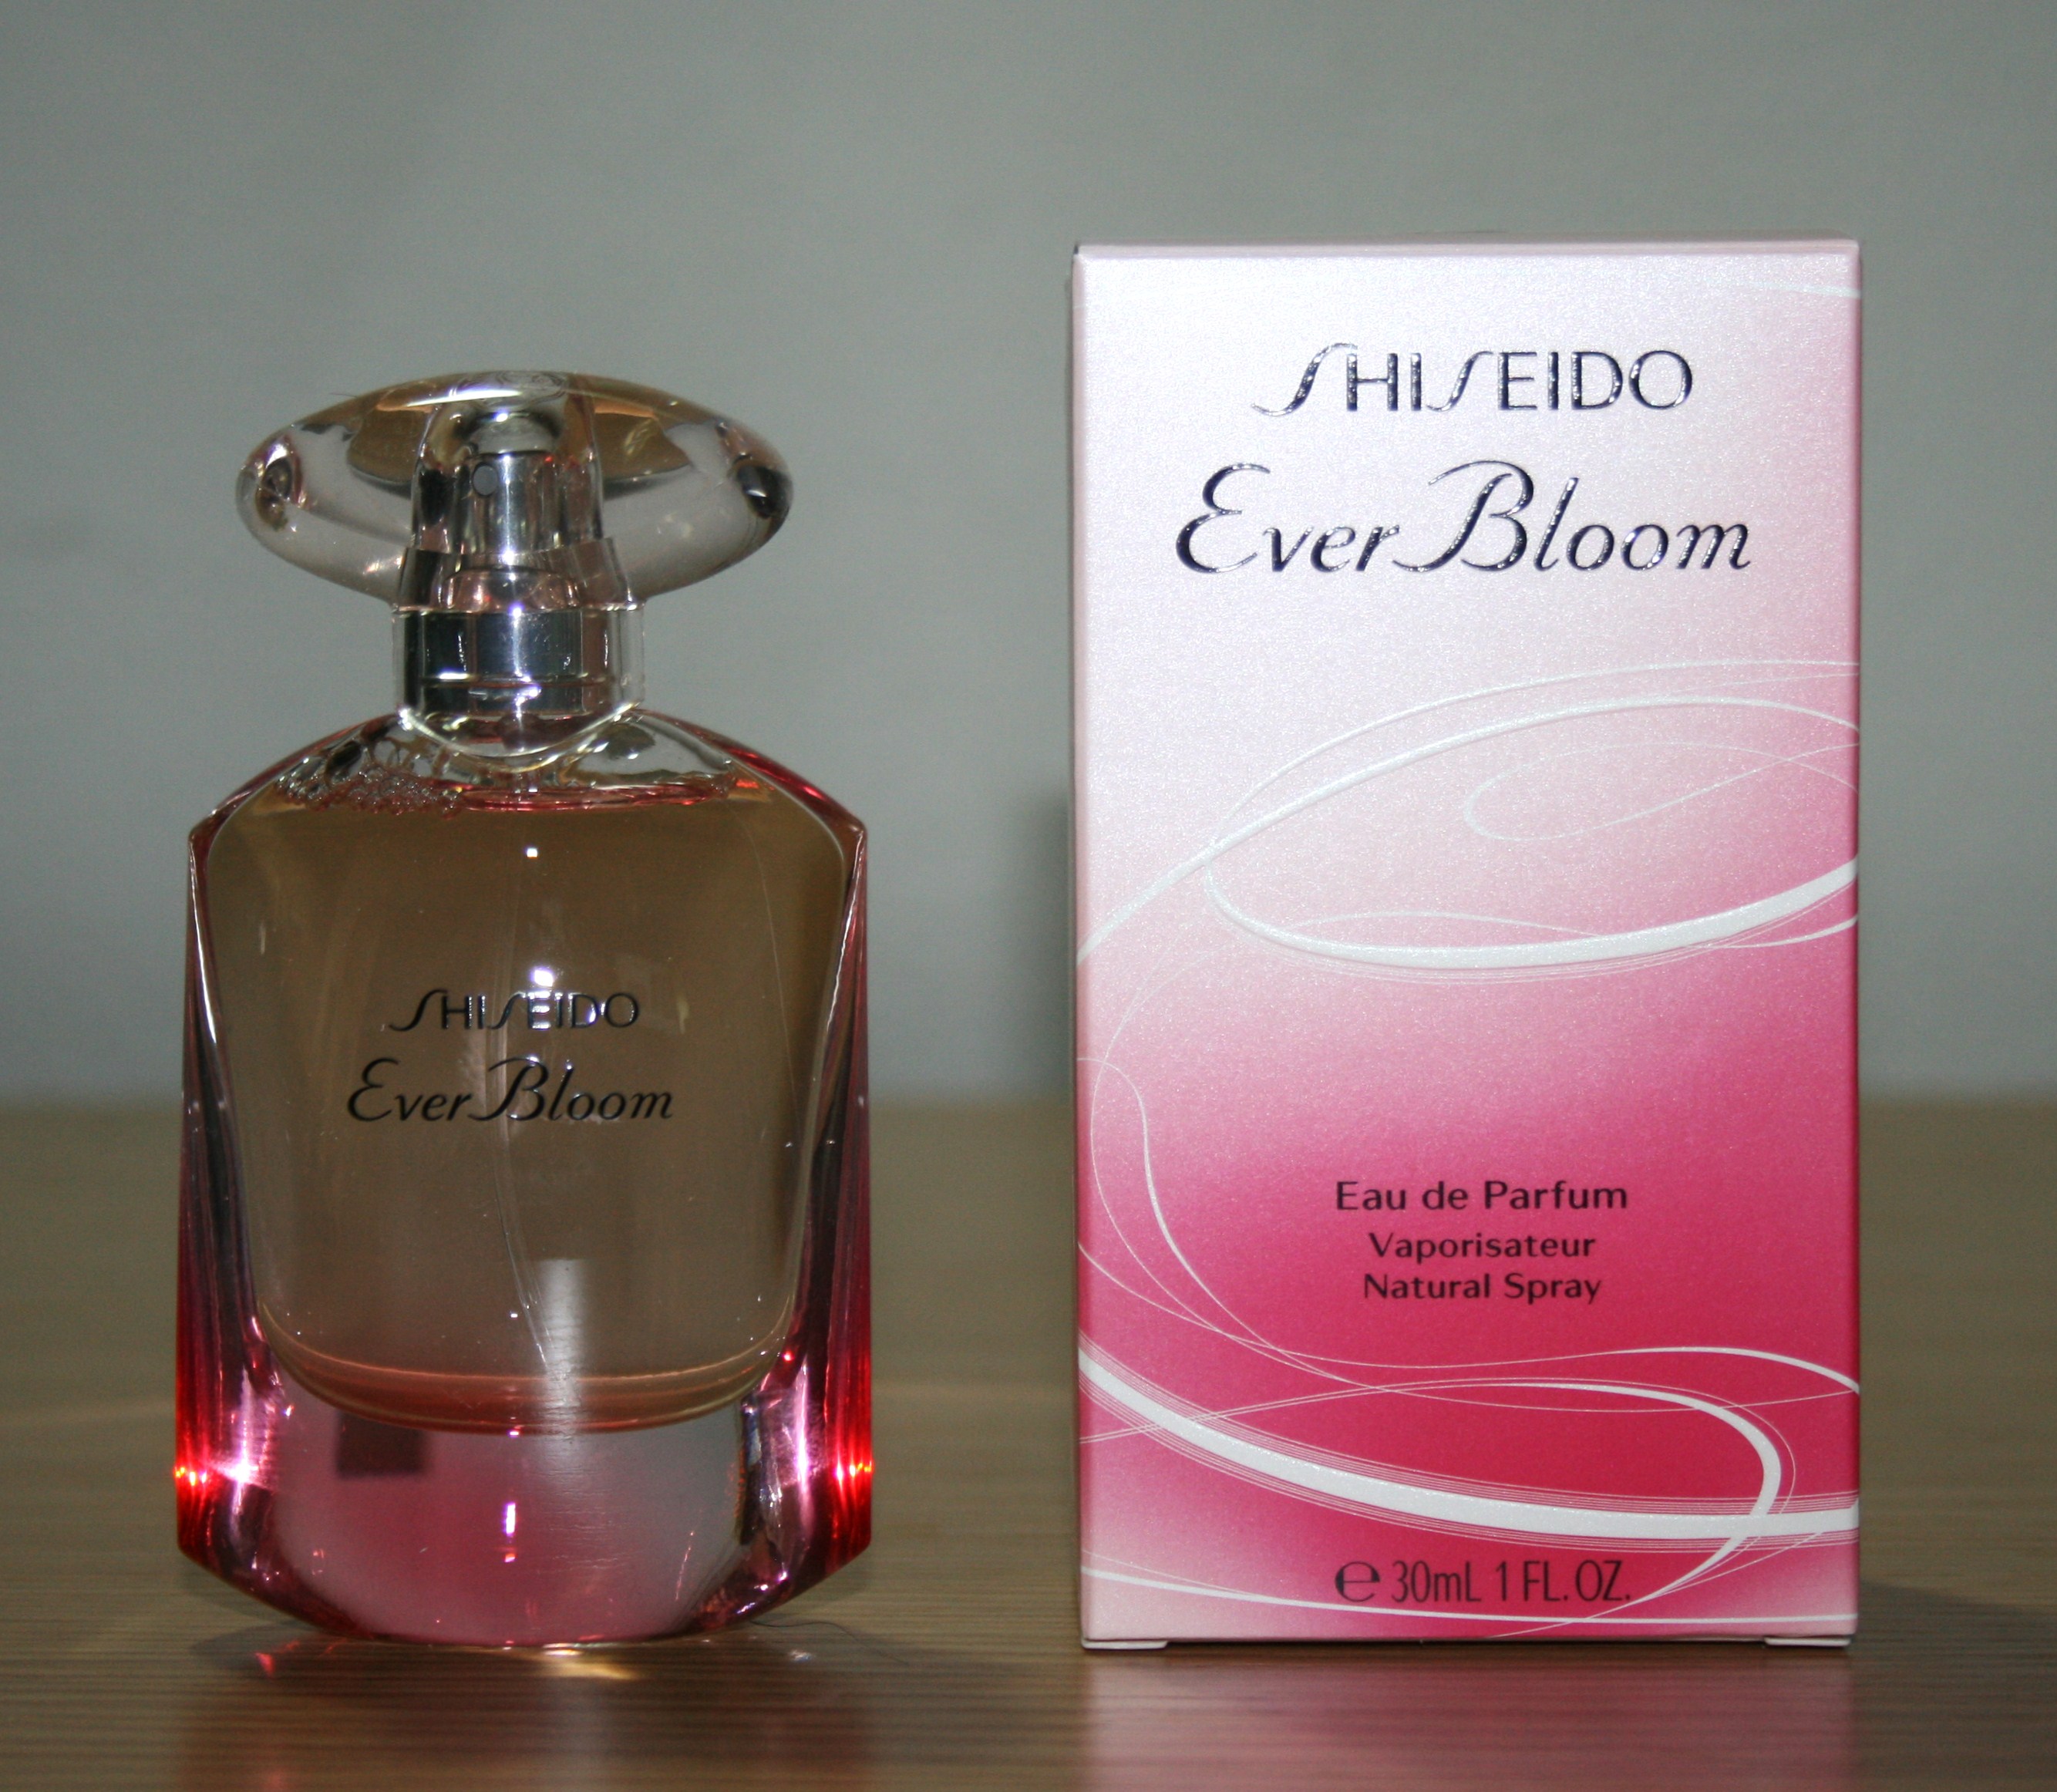 ever bloom shiseido